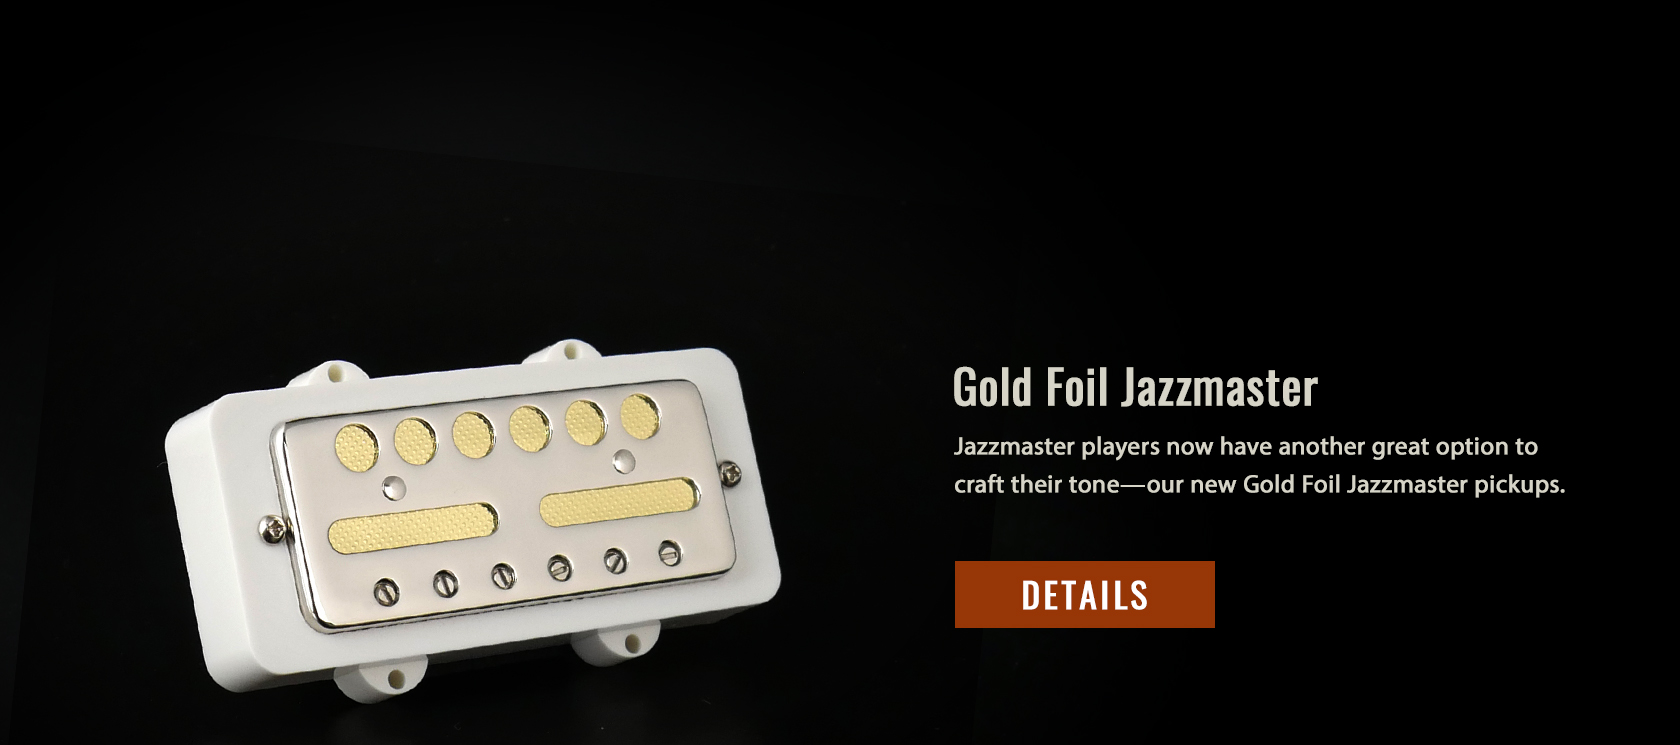 Gold Foil Jazzmaster Picukp